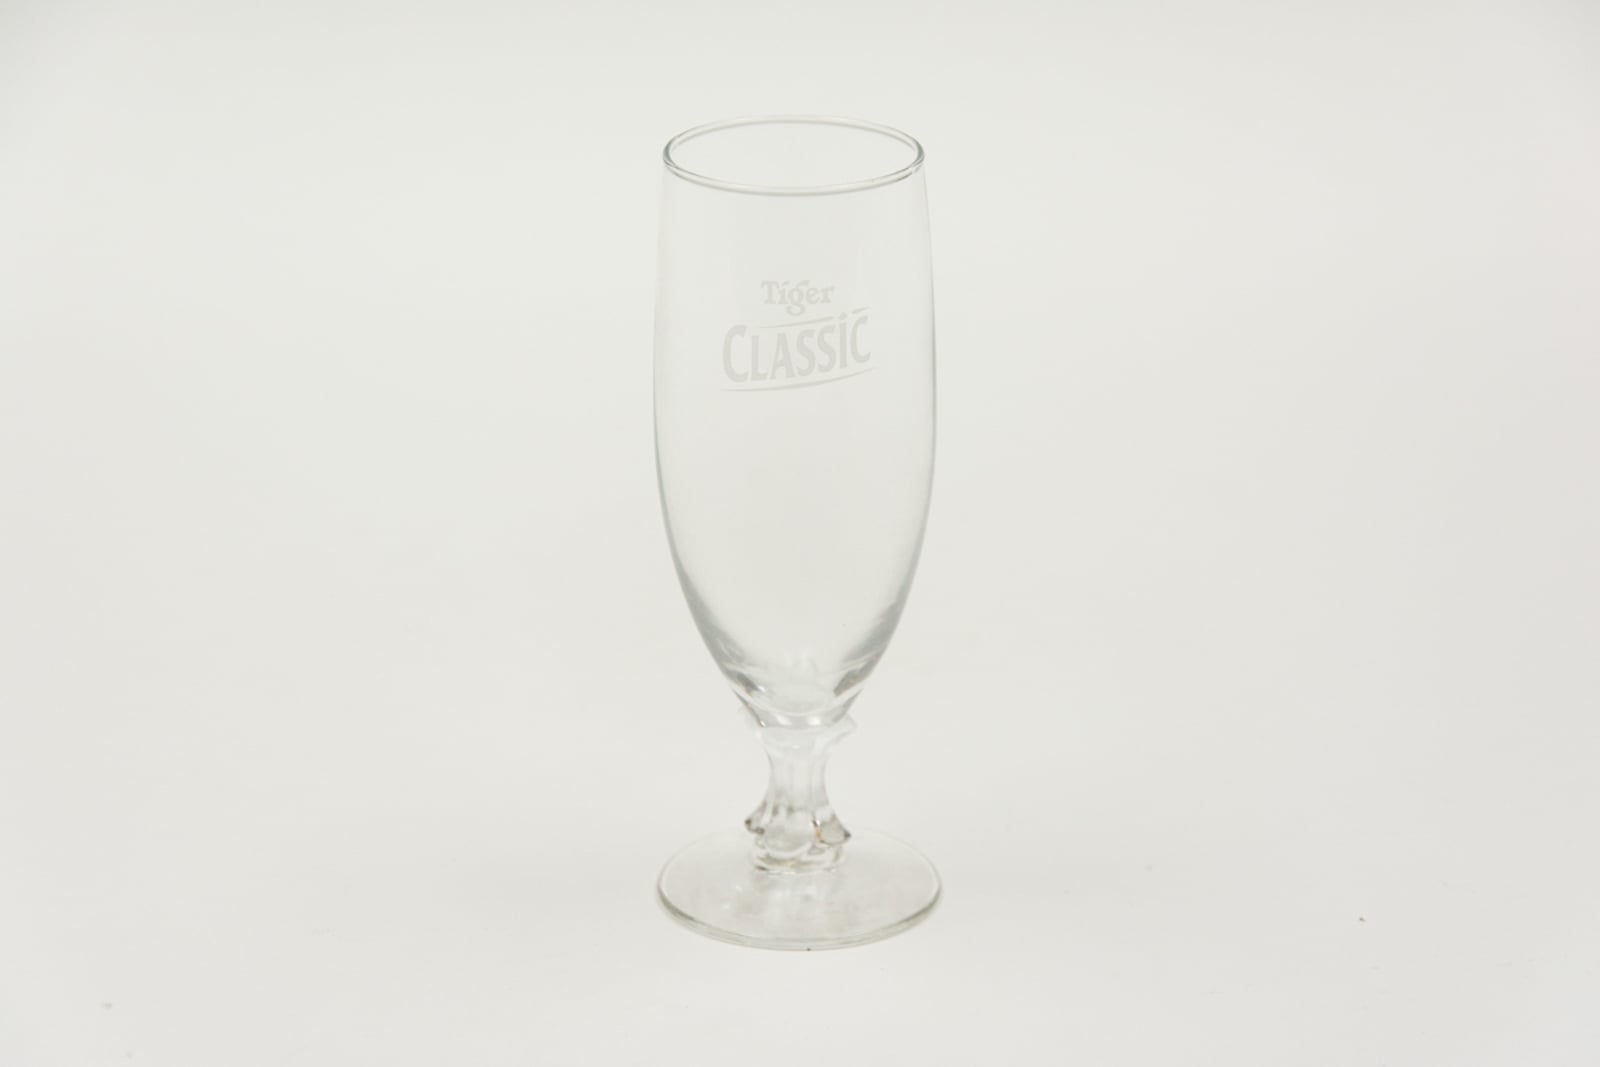 Tiger Classic Pokal Glassware